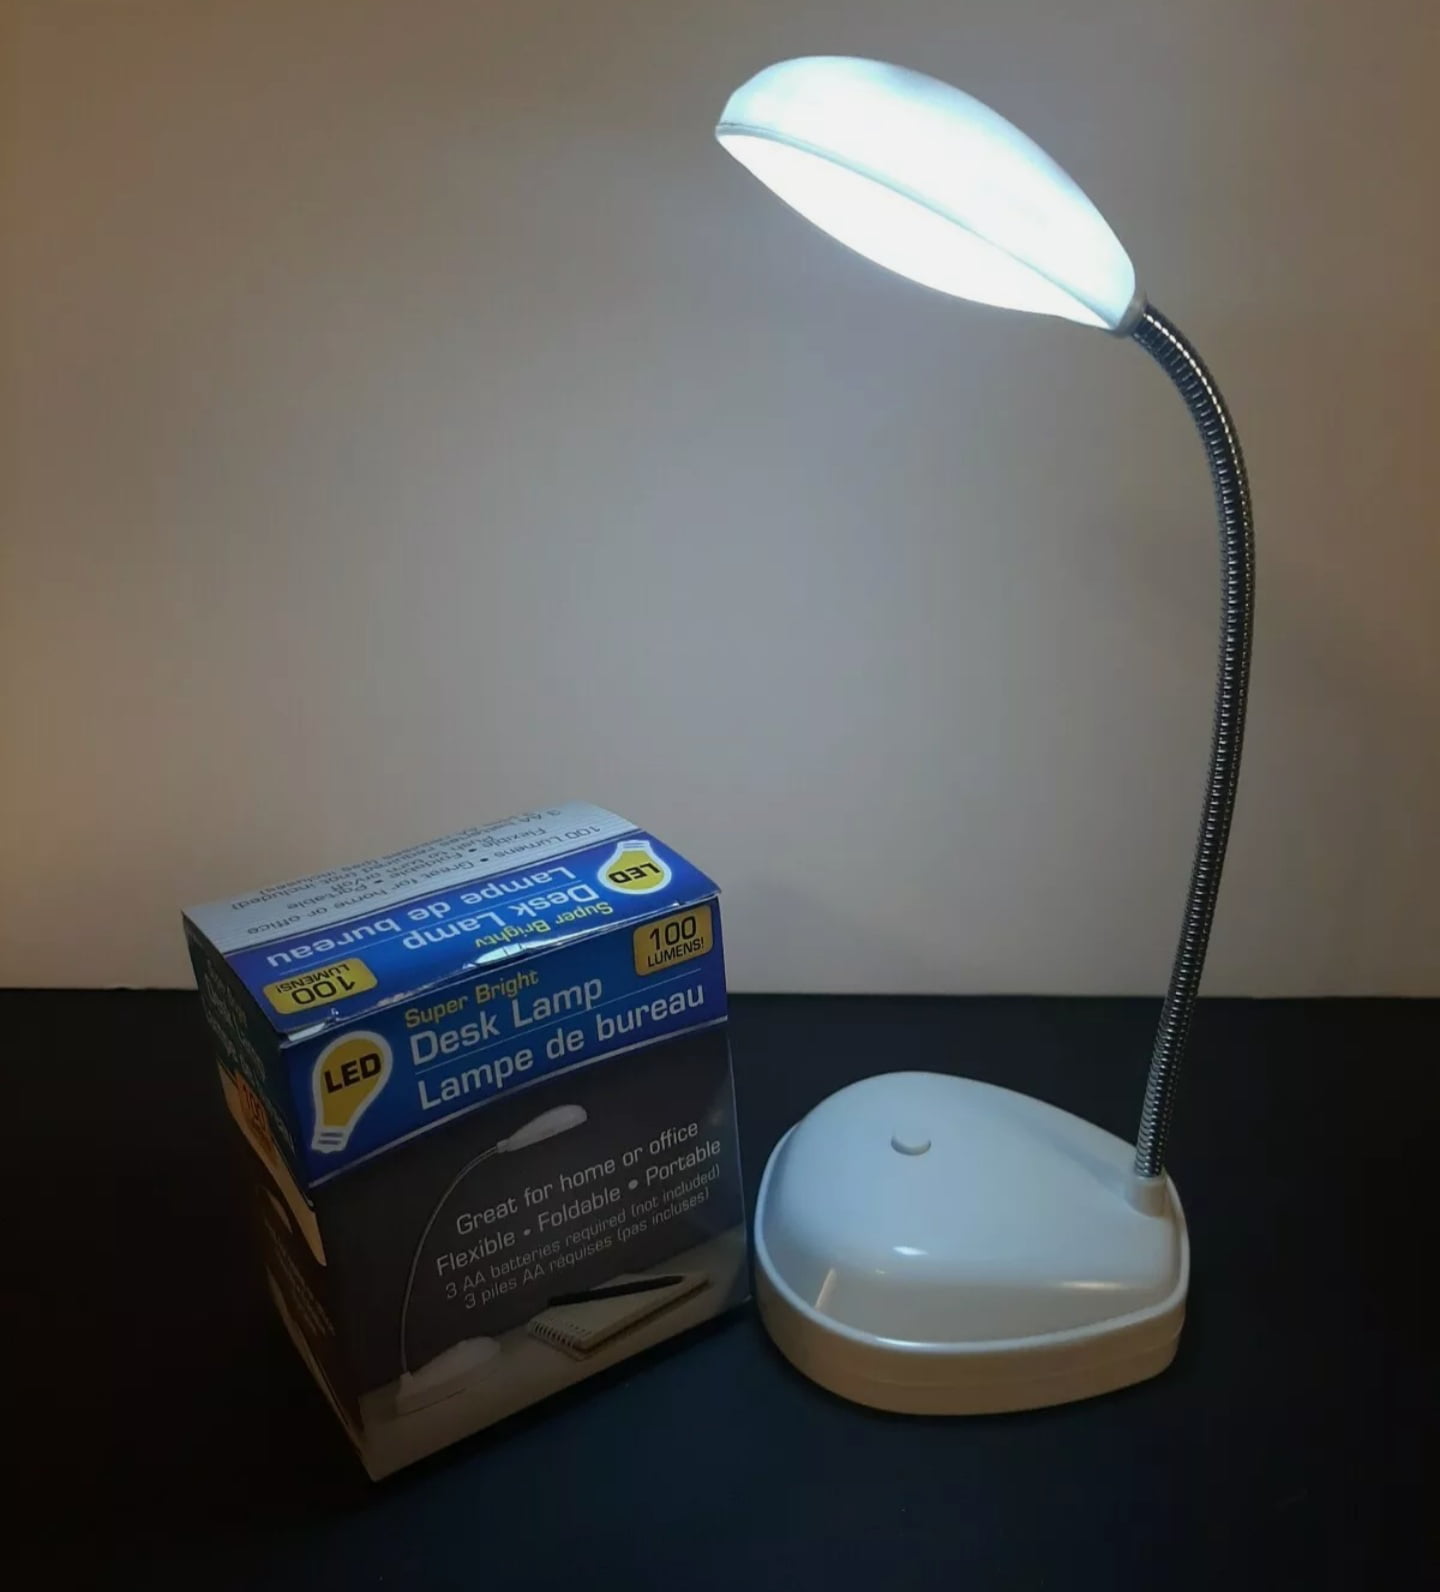 White Super Bright LED Desk Lamp 100 Lumens Flexible Foldable Battery Operated